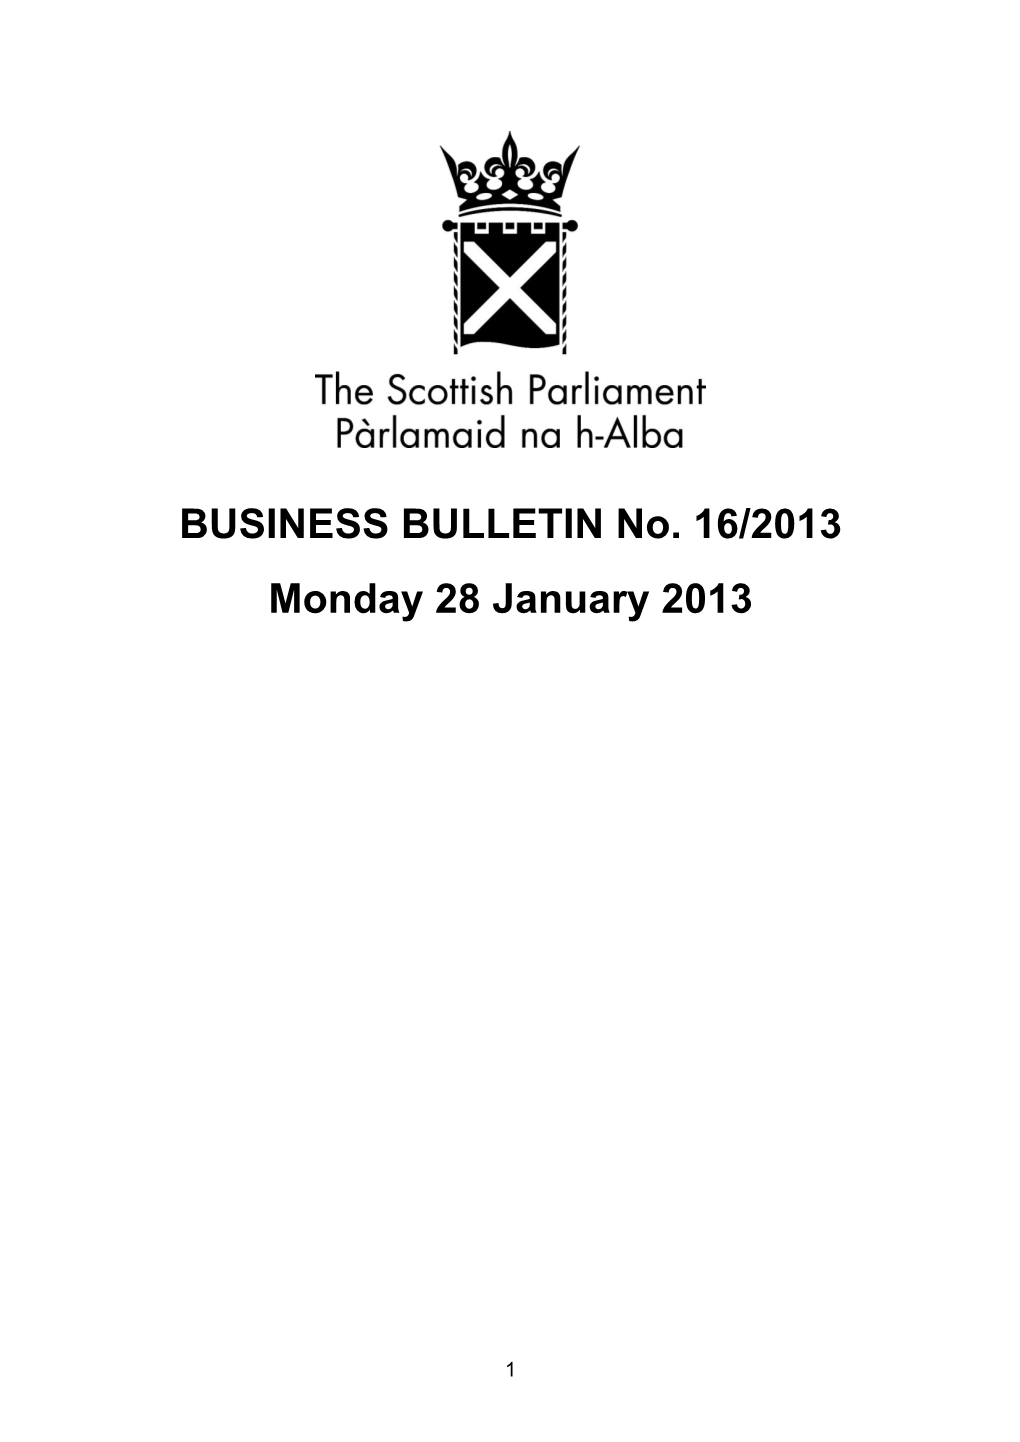 BUSINESS BULLETIN No. 16/2013 Monday 28 January 2013